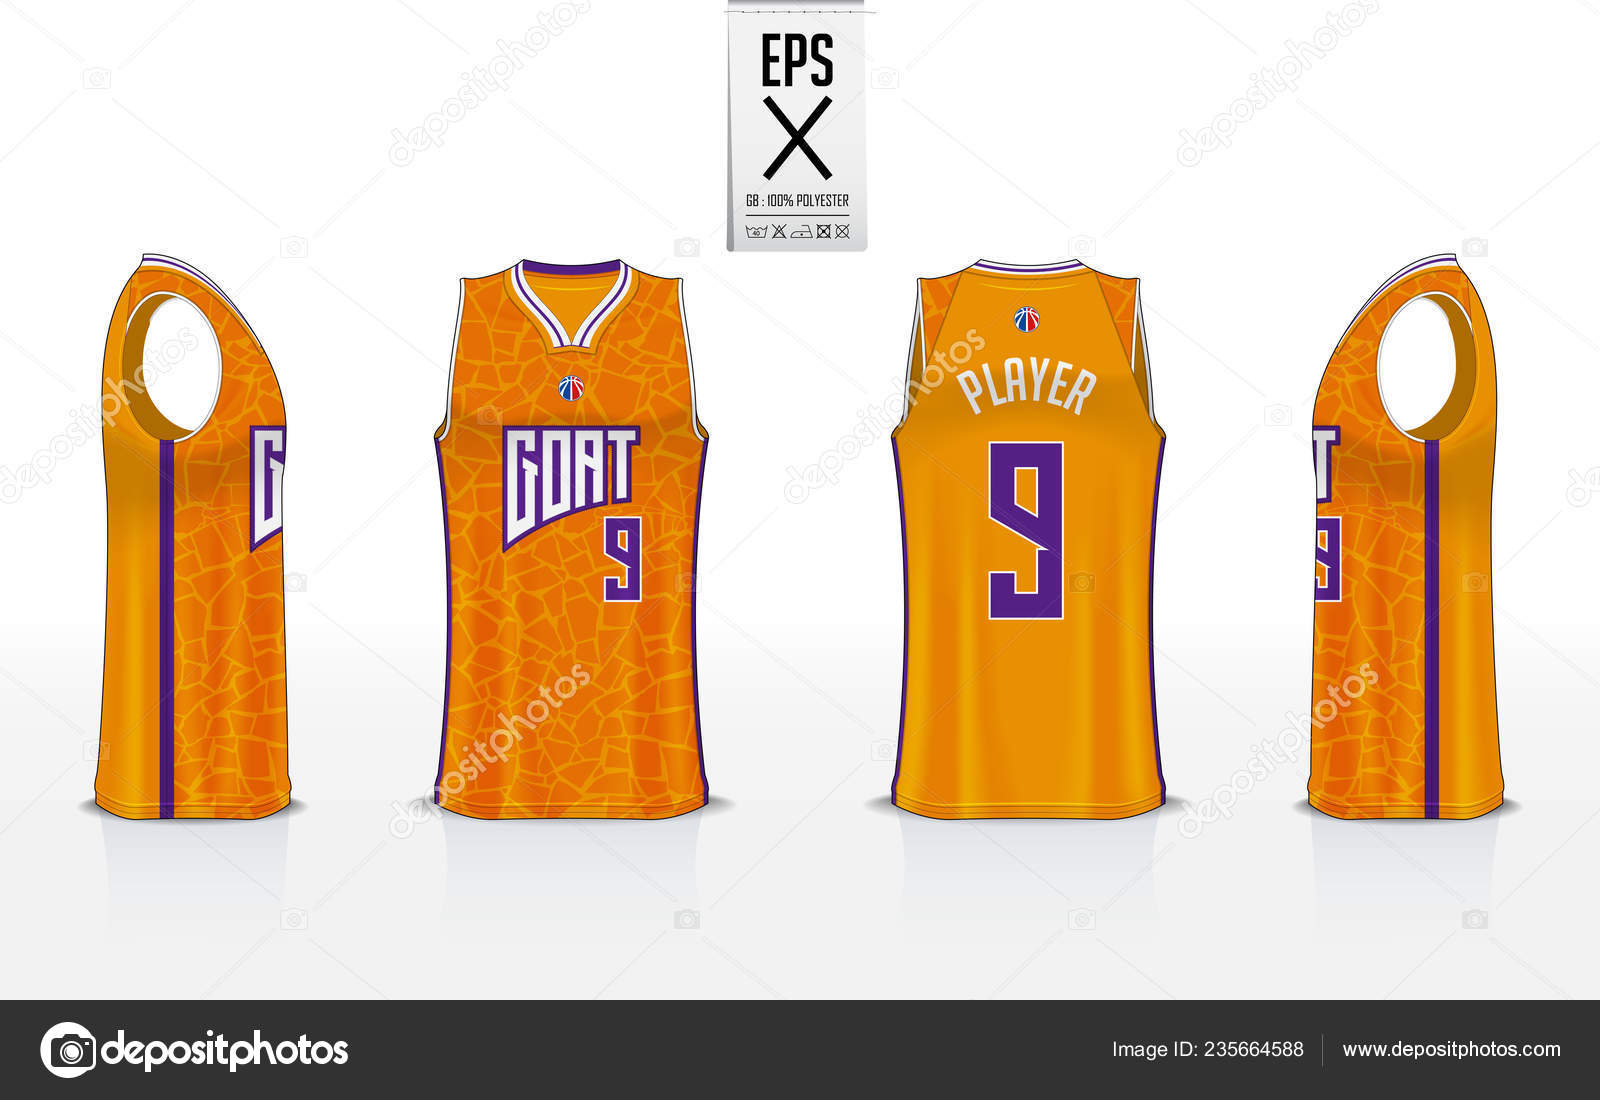 Basketball Uniform Mockup Template Design for Basketball Club